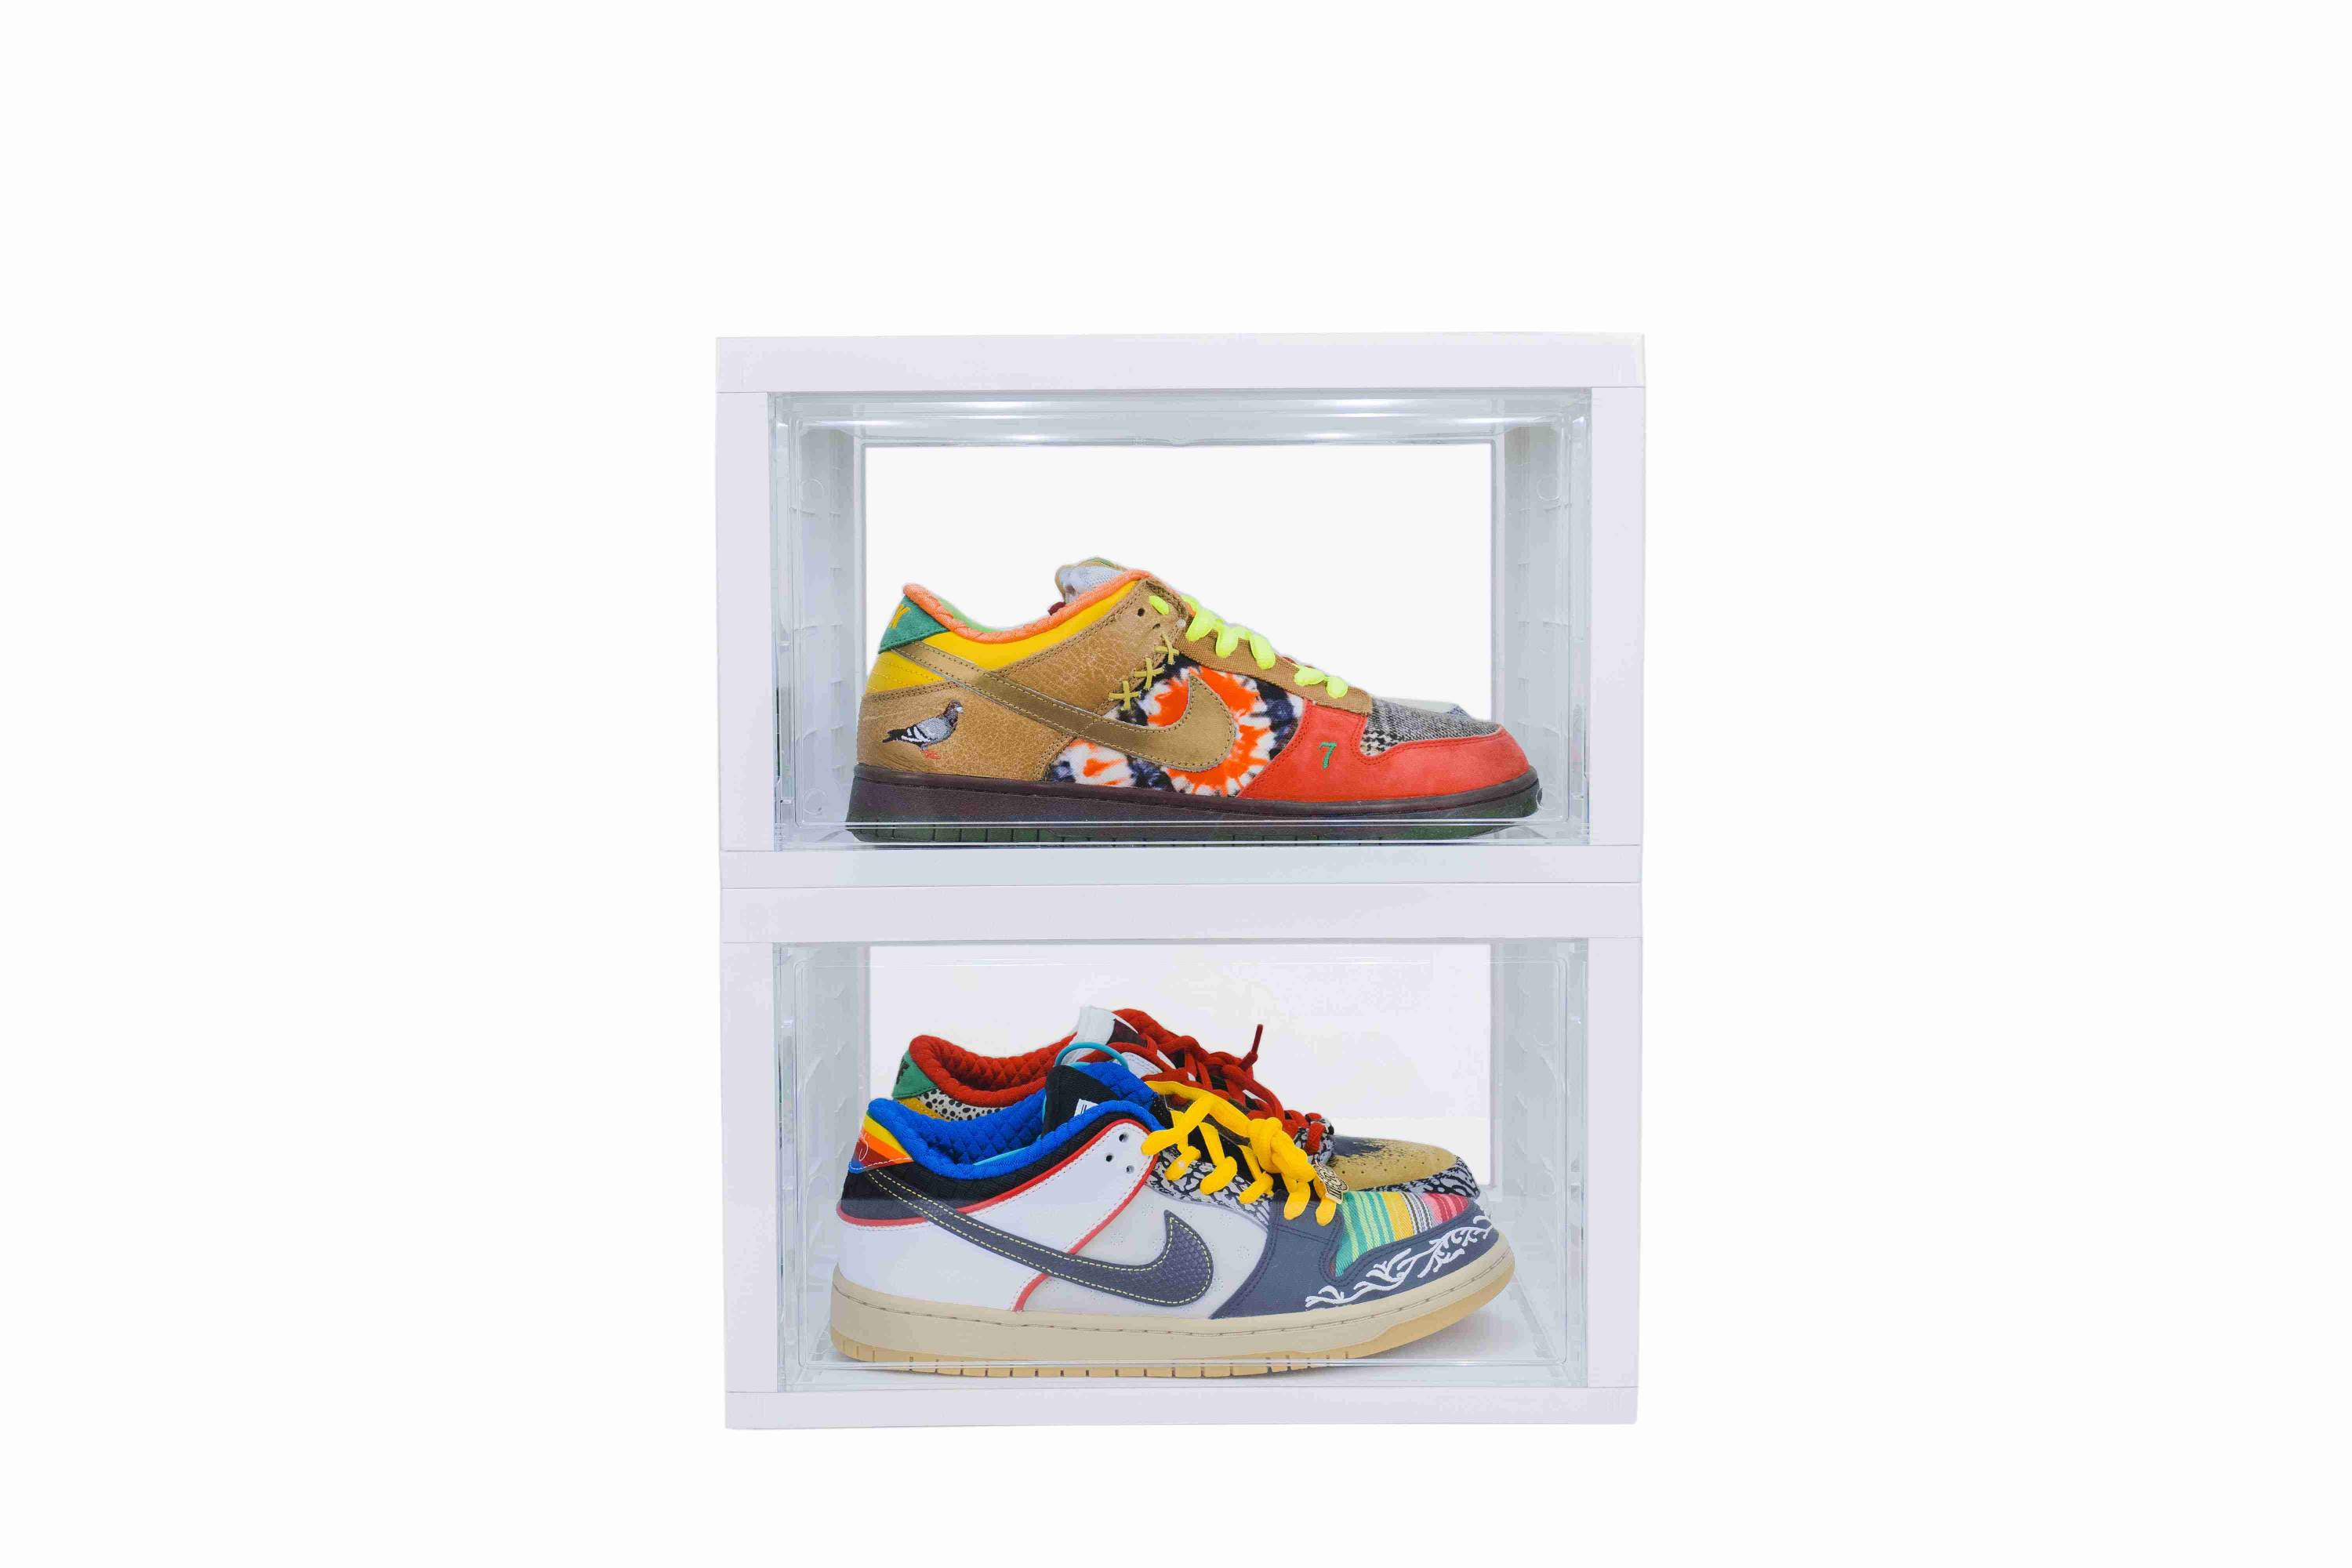 Sneaker crates/shoe box/display box/shoe box